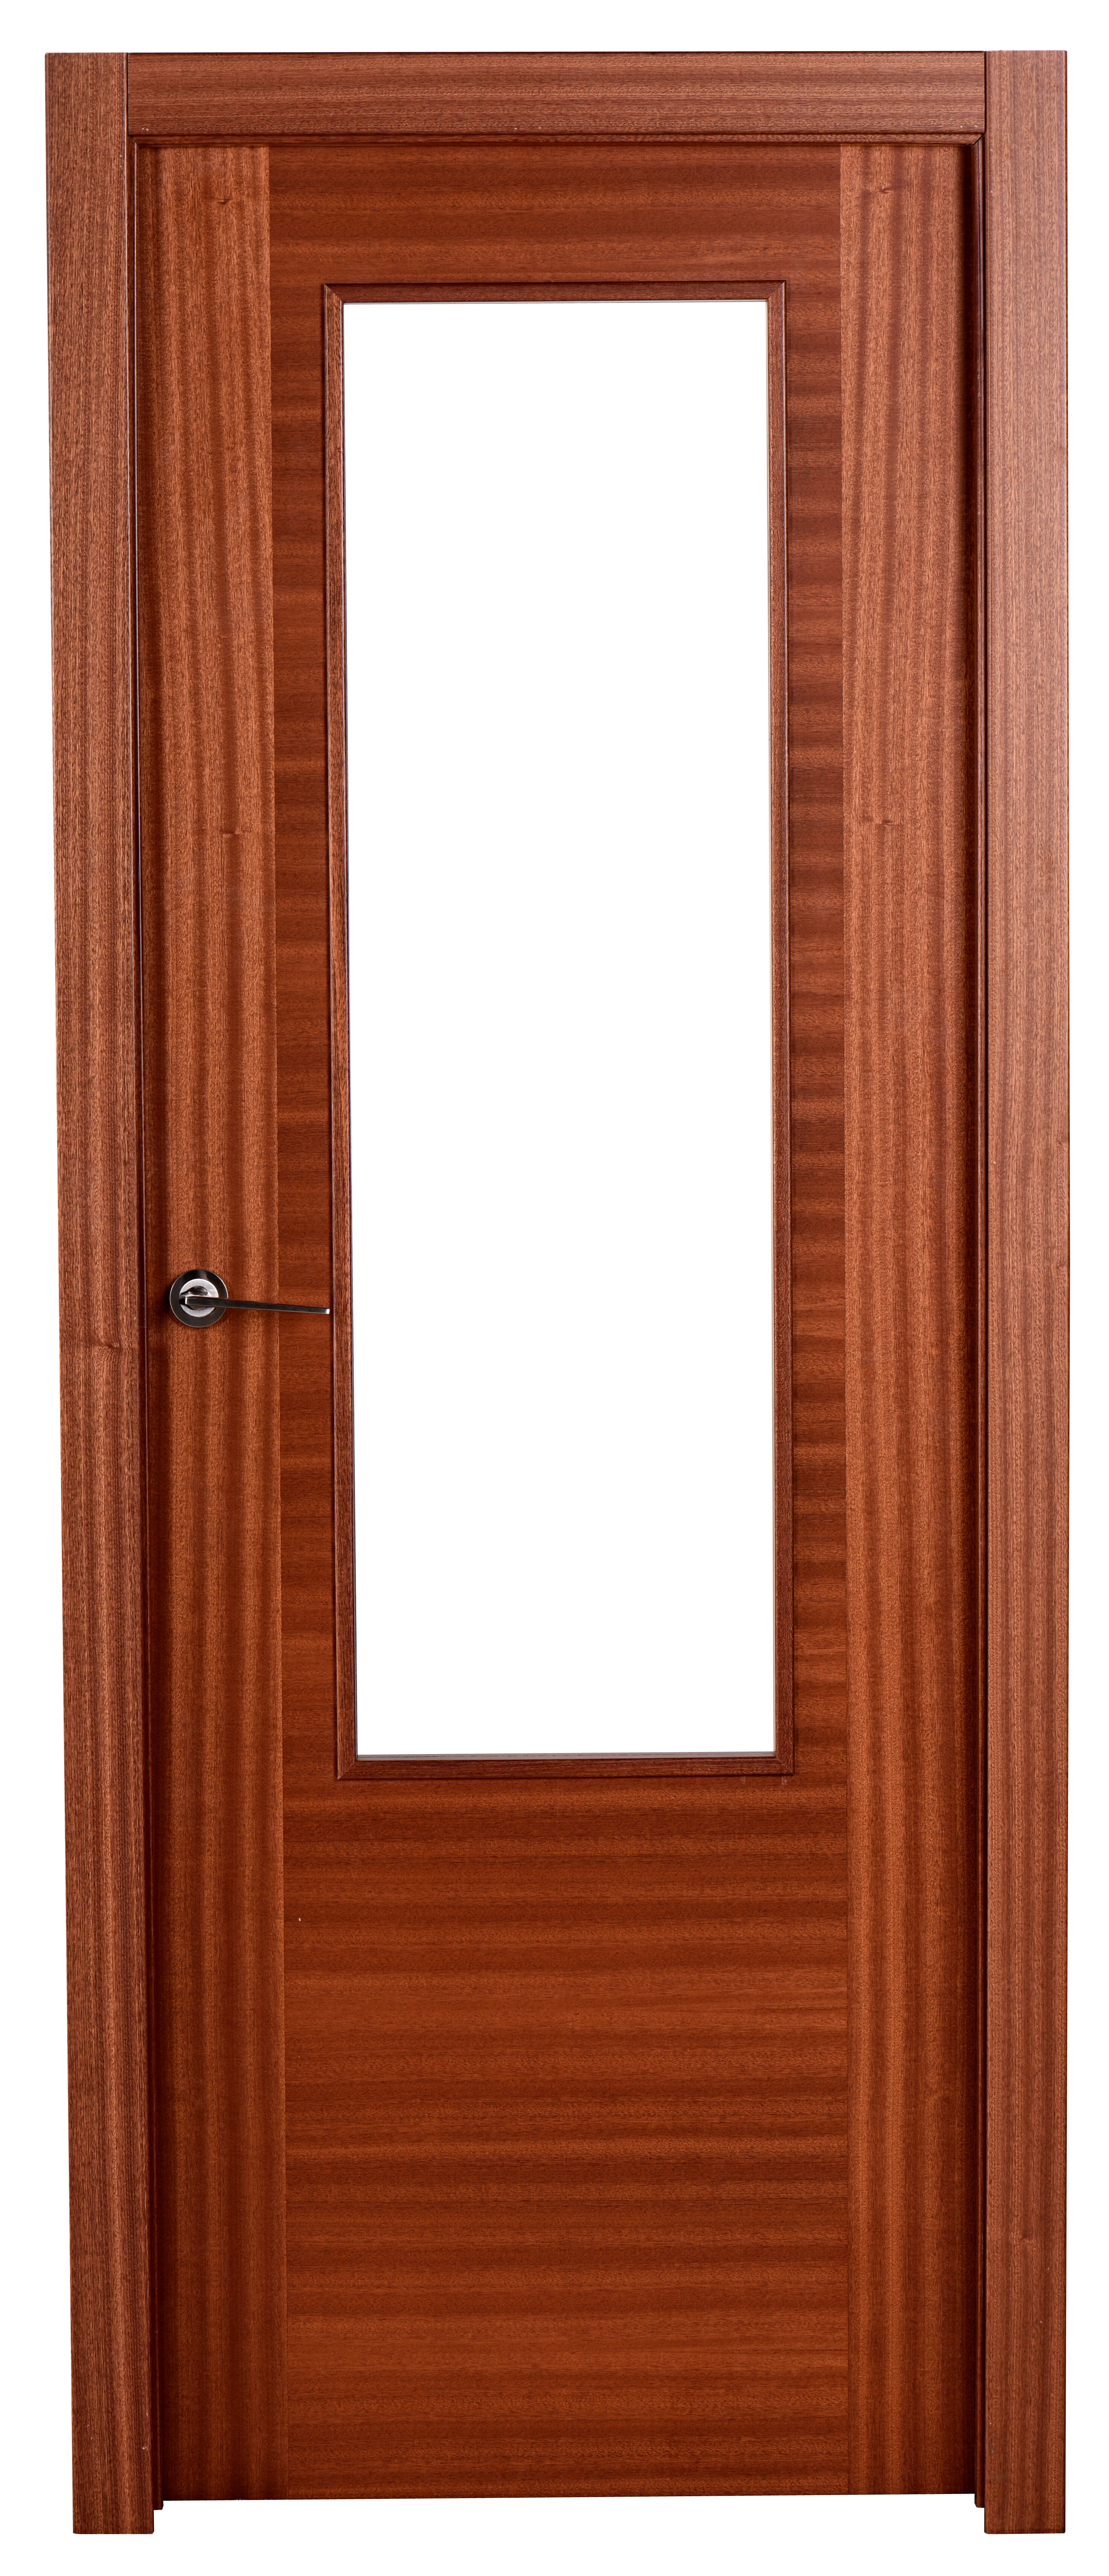 Puerta niza plus sapelly apertura derecha con cristal 9x72.5cm